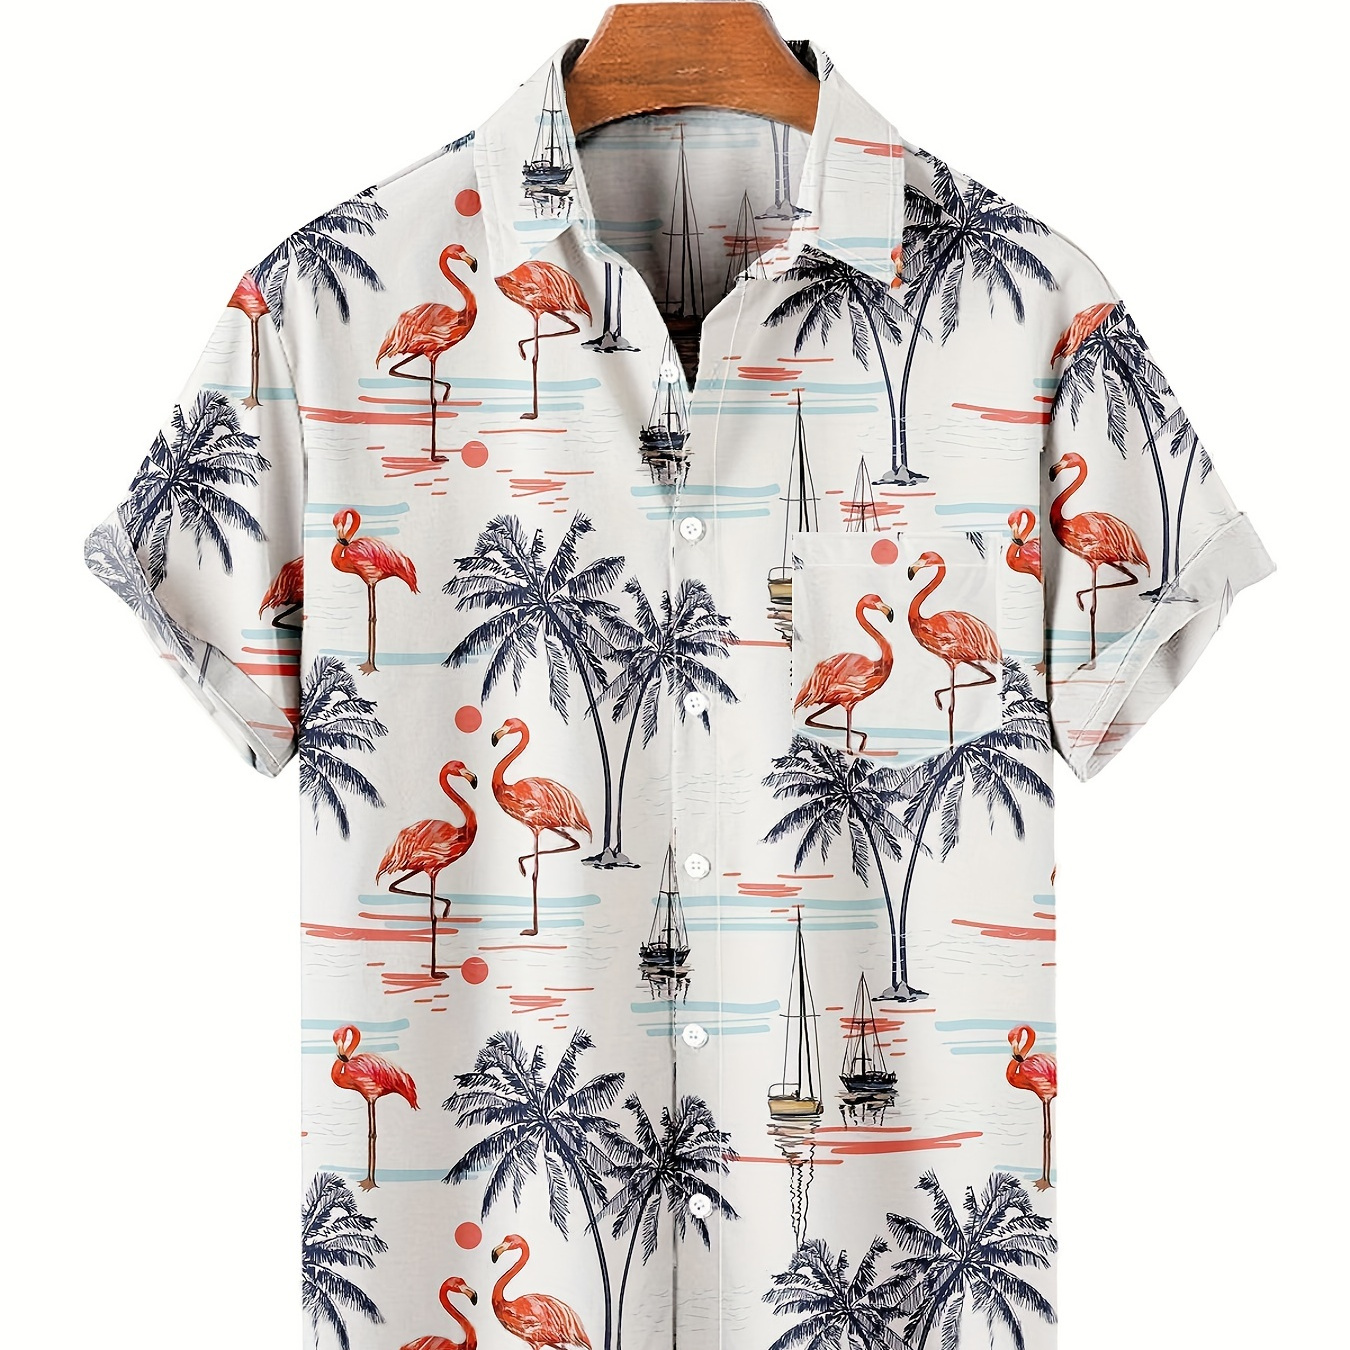 

Hawaiian Coconut Tree & Flamingo Print Men's Casual Short Sleeve Shirt, Men's Shirt For Summer Vacation Resort, Tops For Men, Gift For Men